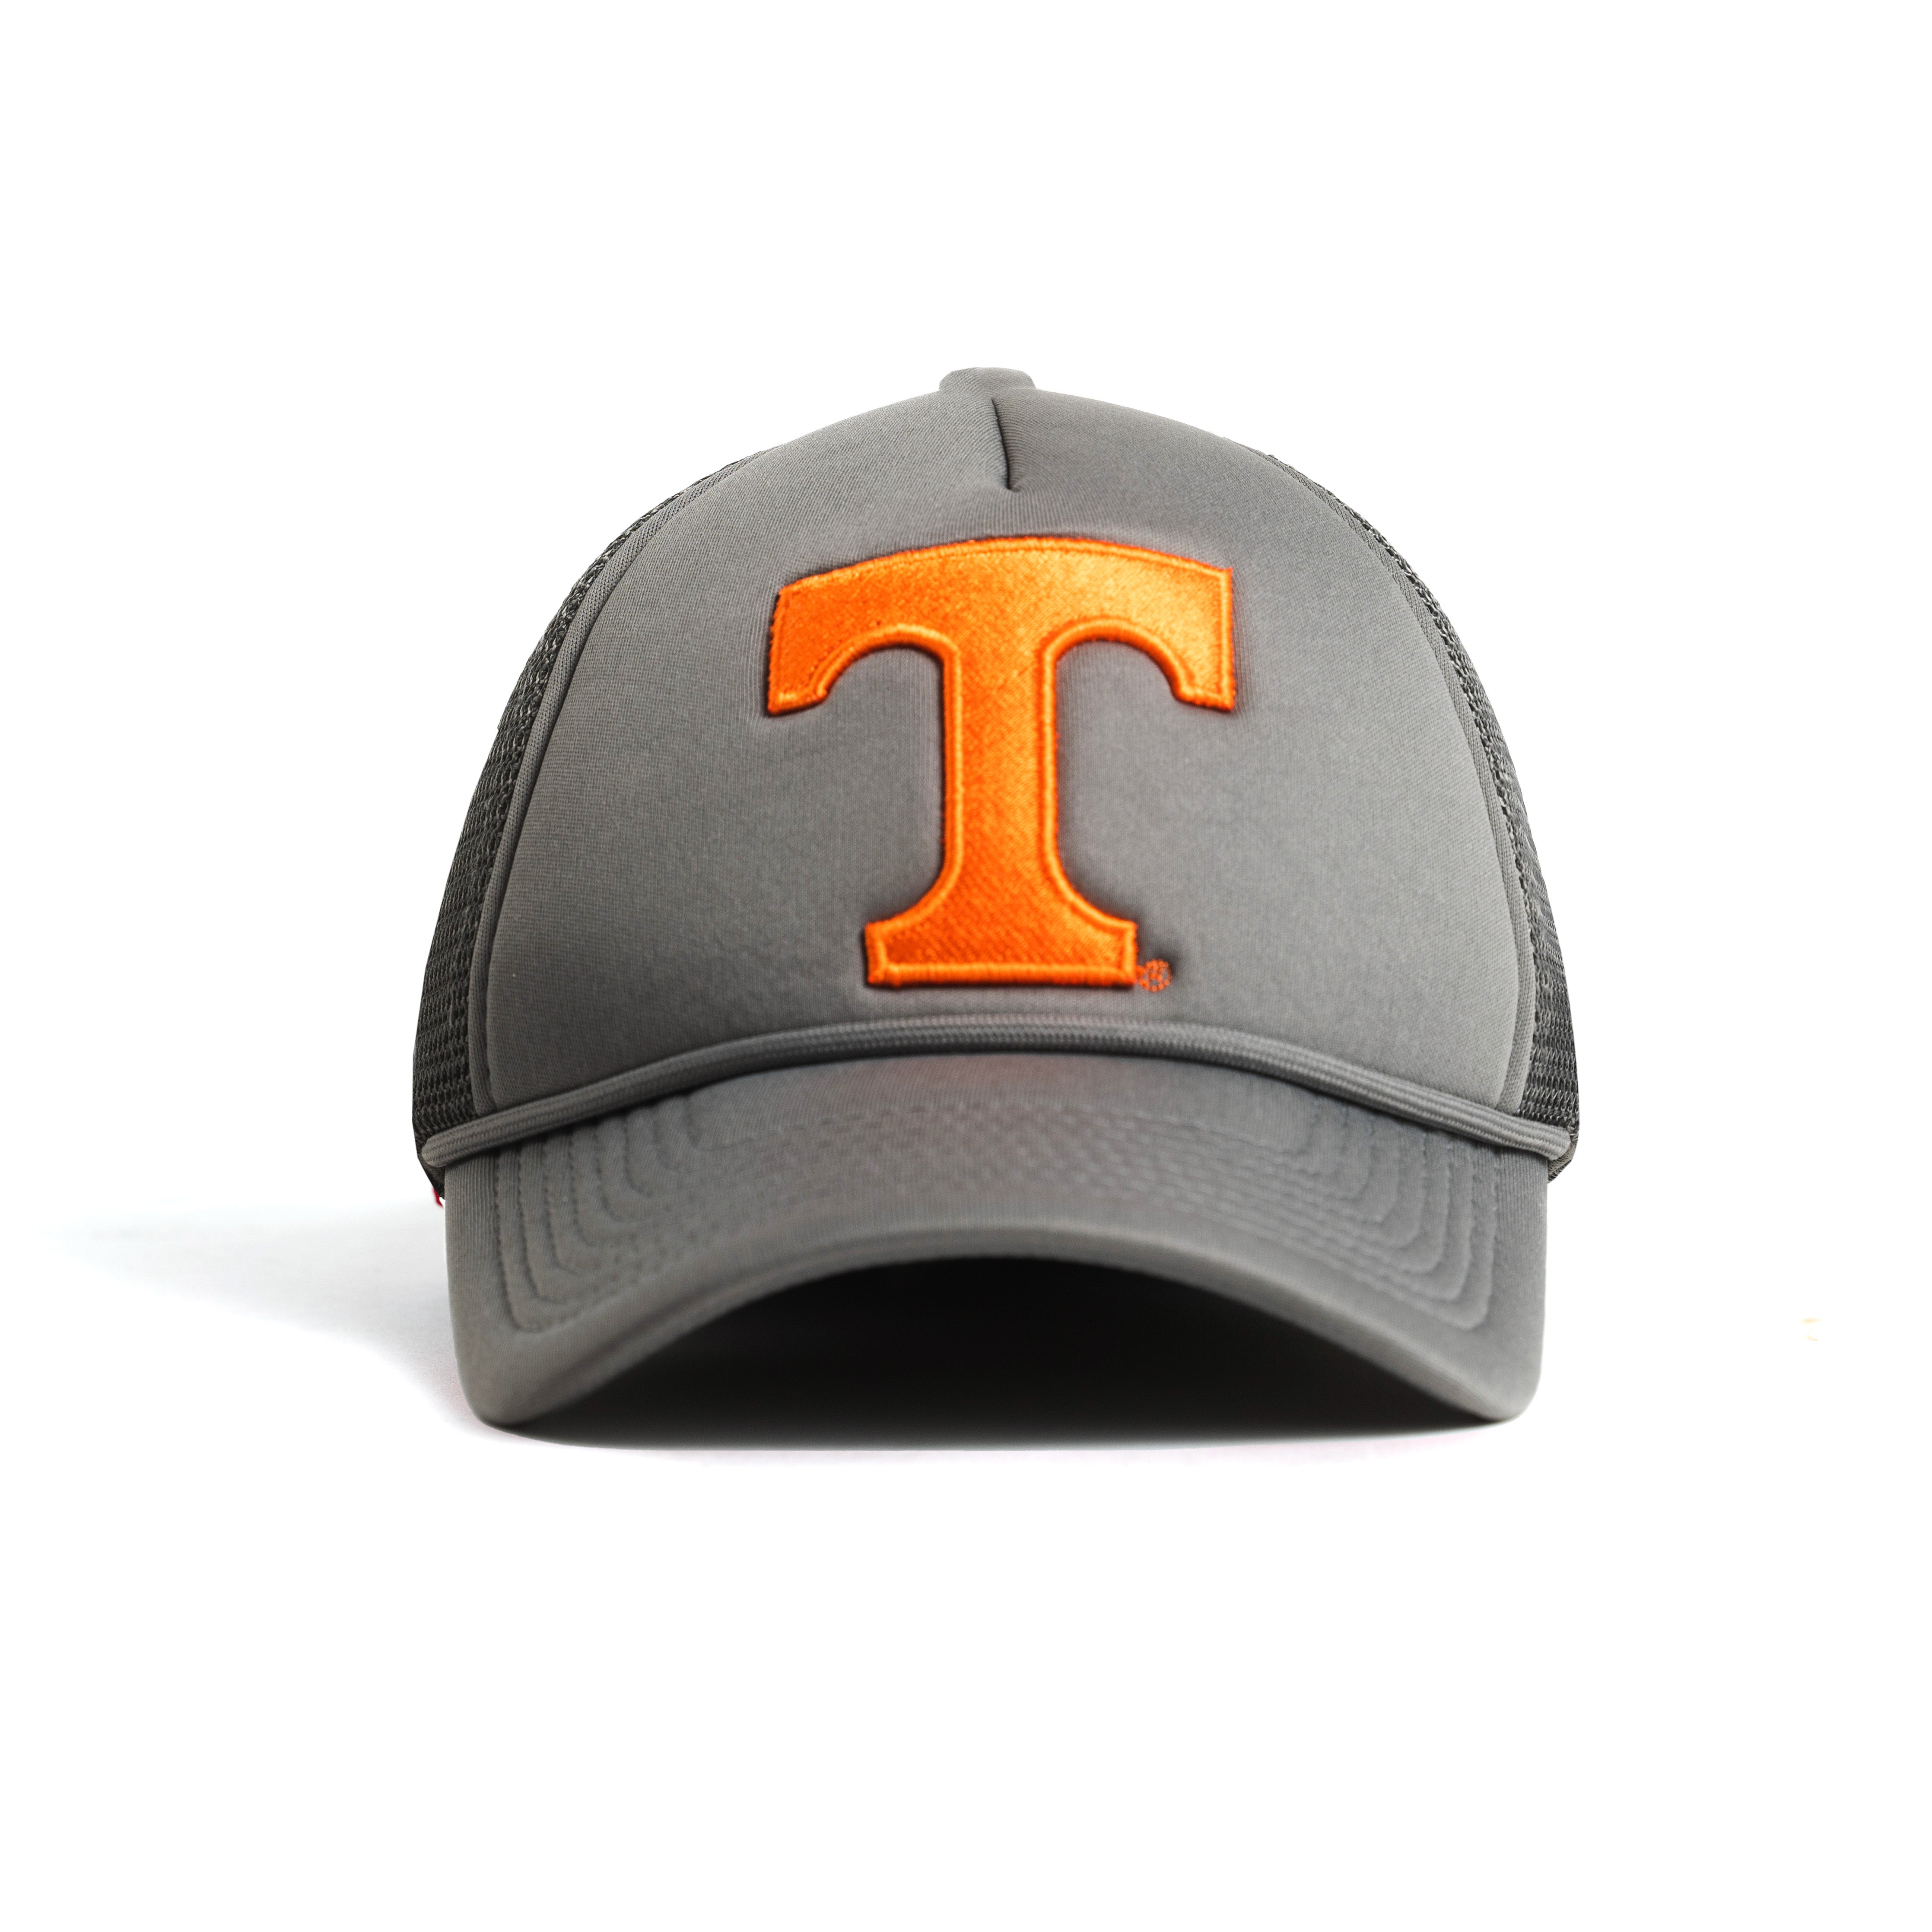 Tennessee Volunteers Trucker Hat